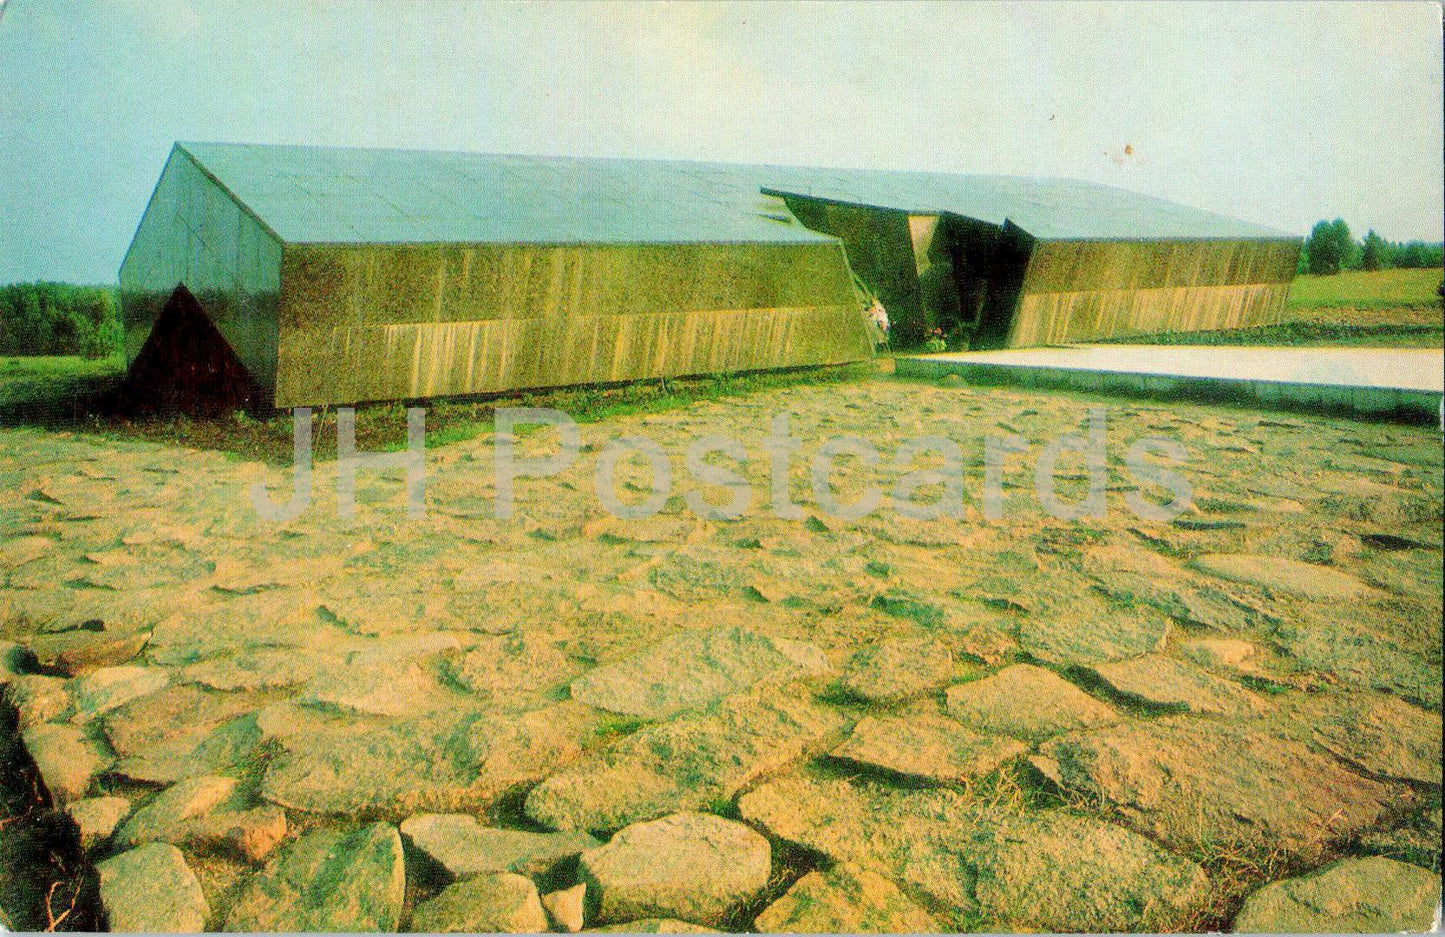 Complexe commémoratif de Khatyn - Mémorial - 1980 - Biélorussie URSS - inutilisé 